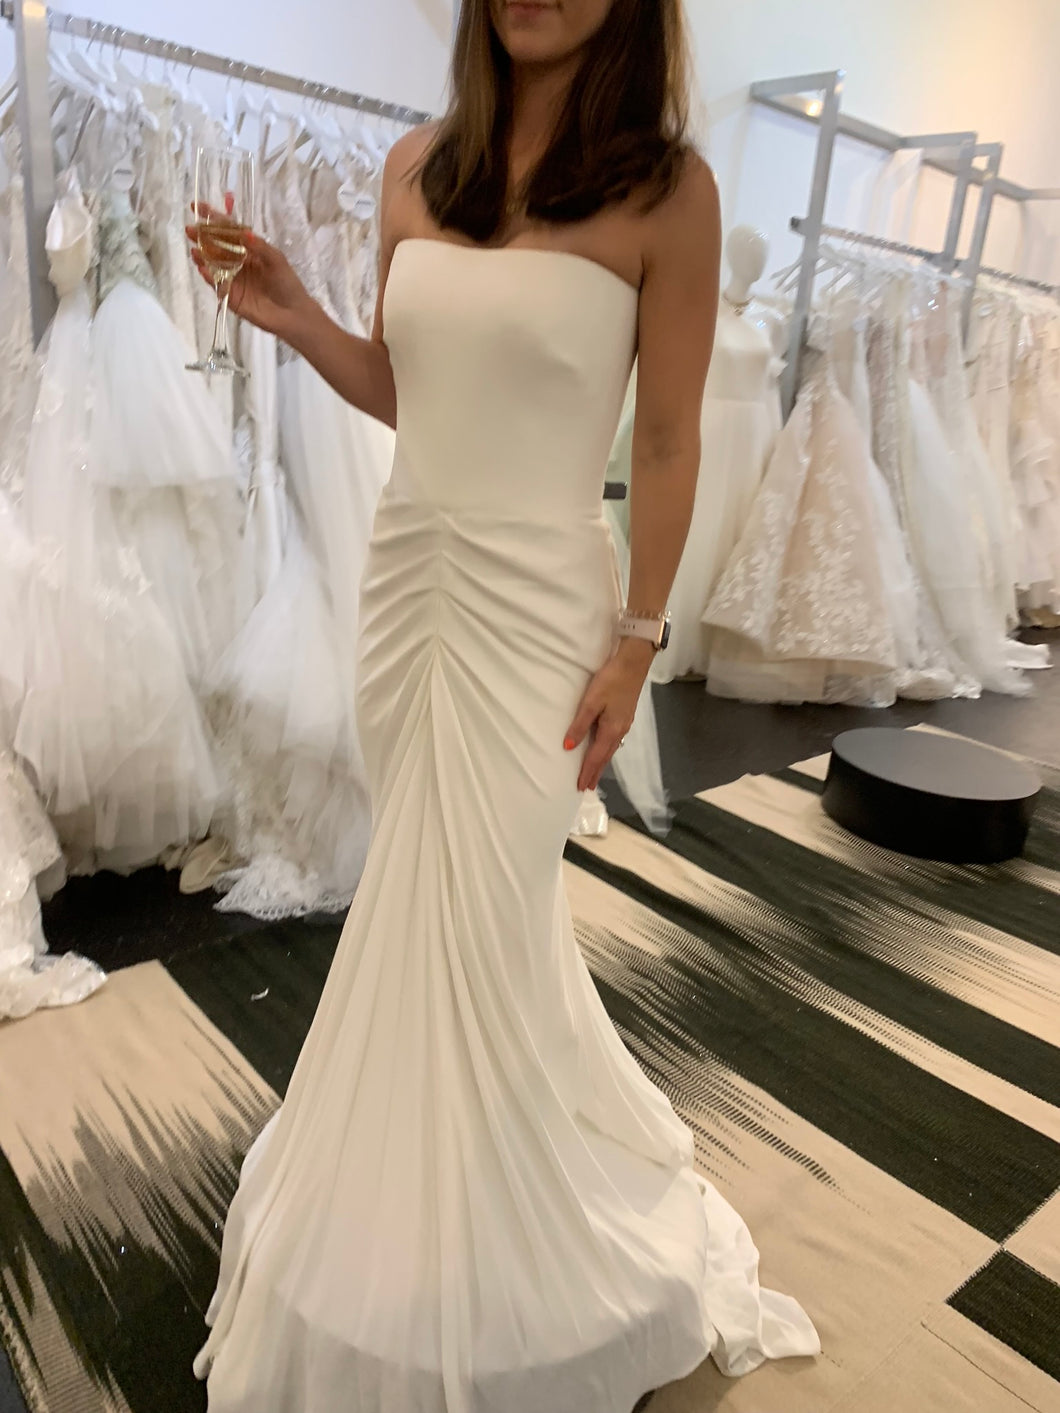 Vera Wang 'Delphine' wedding dress size-02 NEW